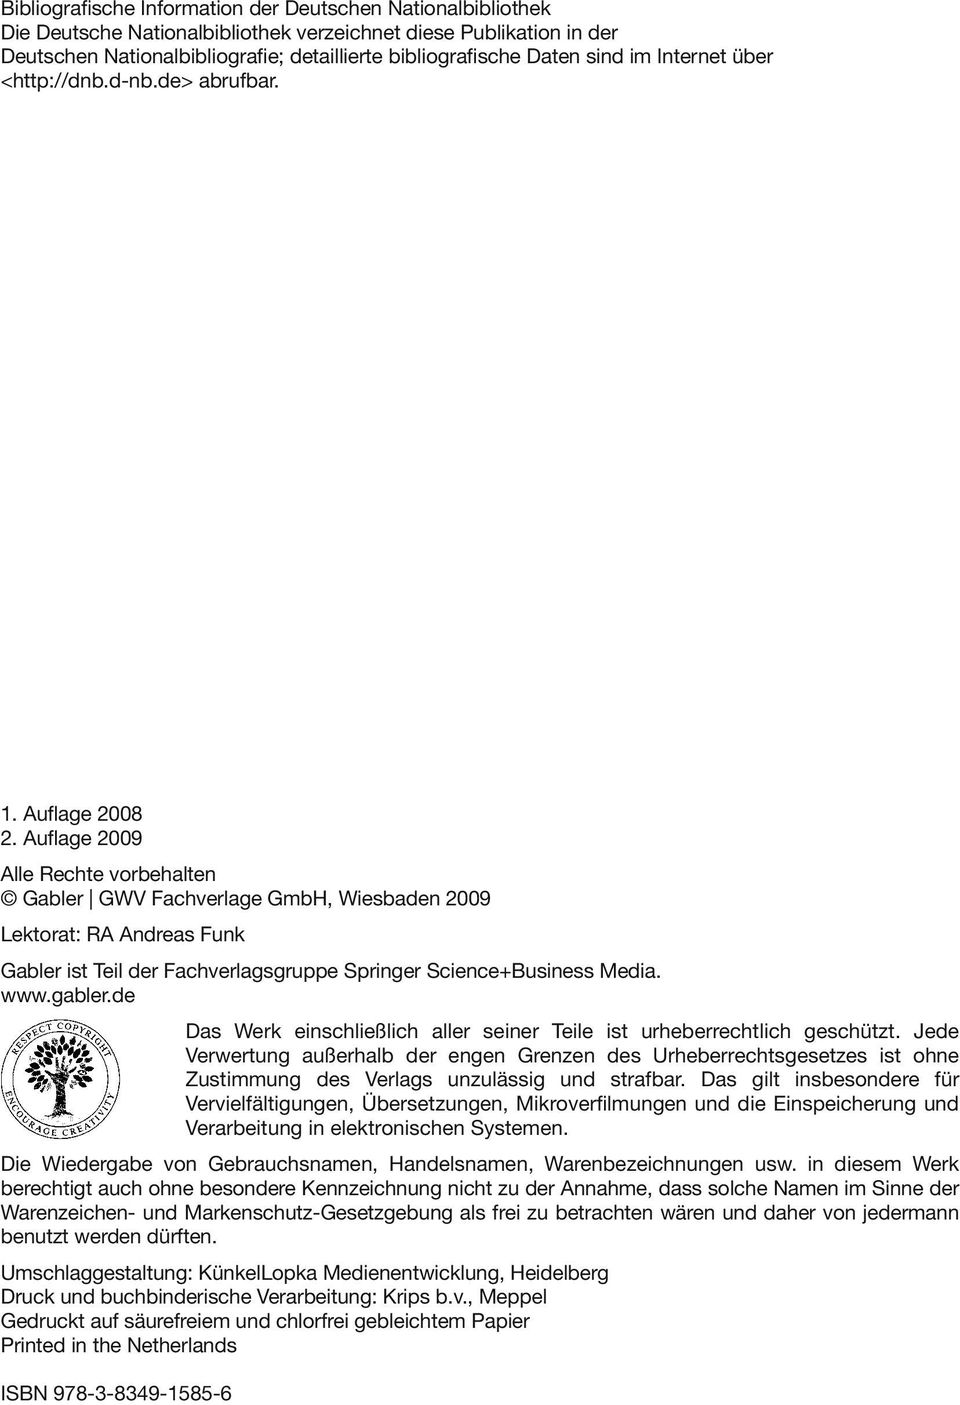 Auflage 2009 Alle Rechte vorbehalten Gabler GWV Fachverlage GmbH, Wiesbaden 2009 Lektorat: RA Andreas Funk Gabler ist Teil der Fachverlagsgruppe Springer Science+Business Media. www.gabler.